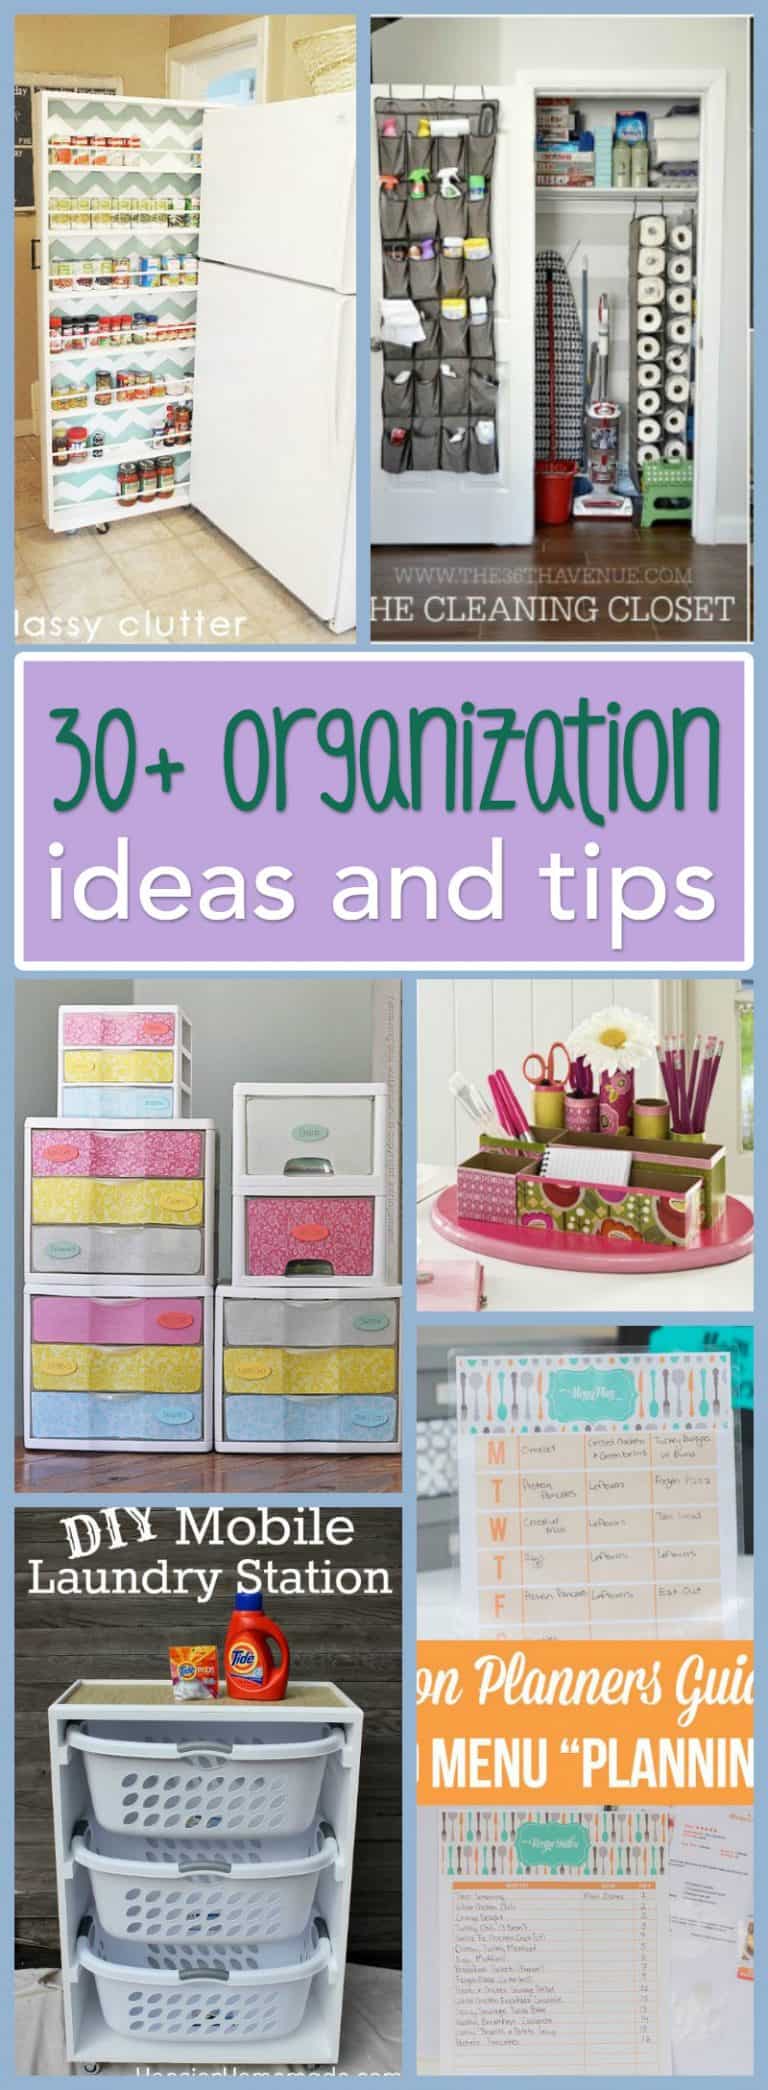 30+ Organization Ideas and Tips: maximizing your organization skills!